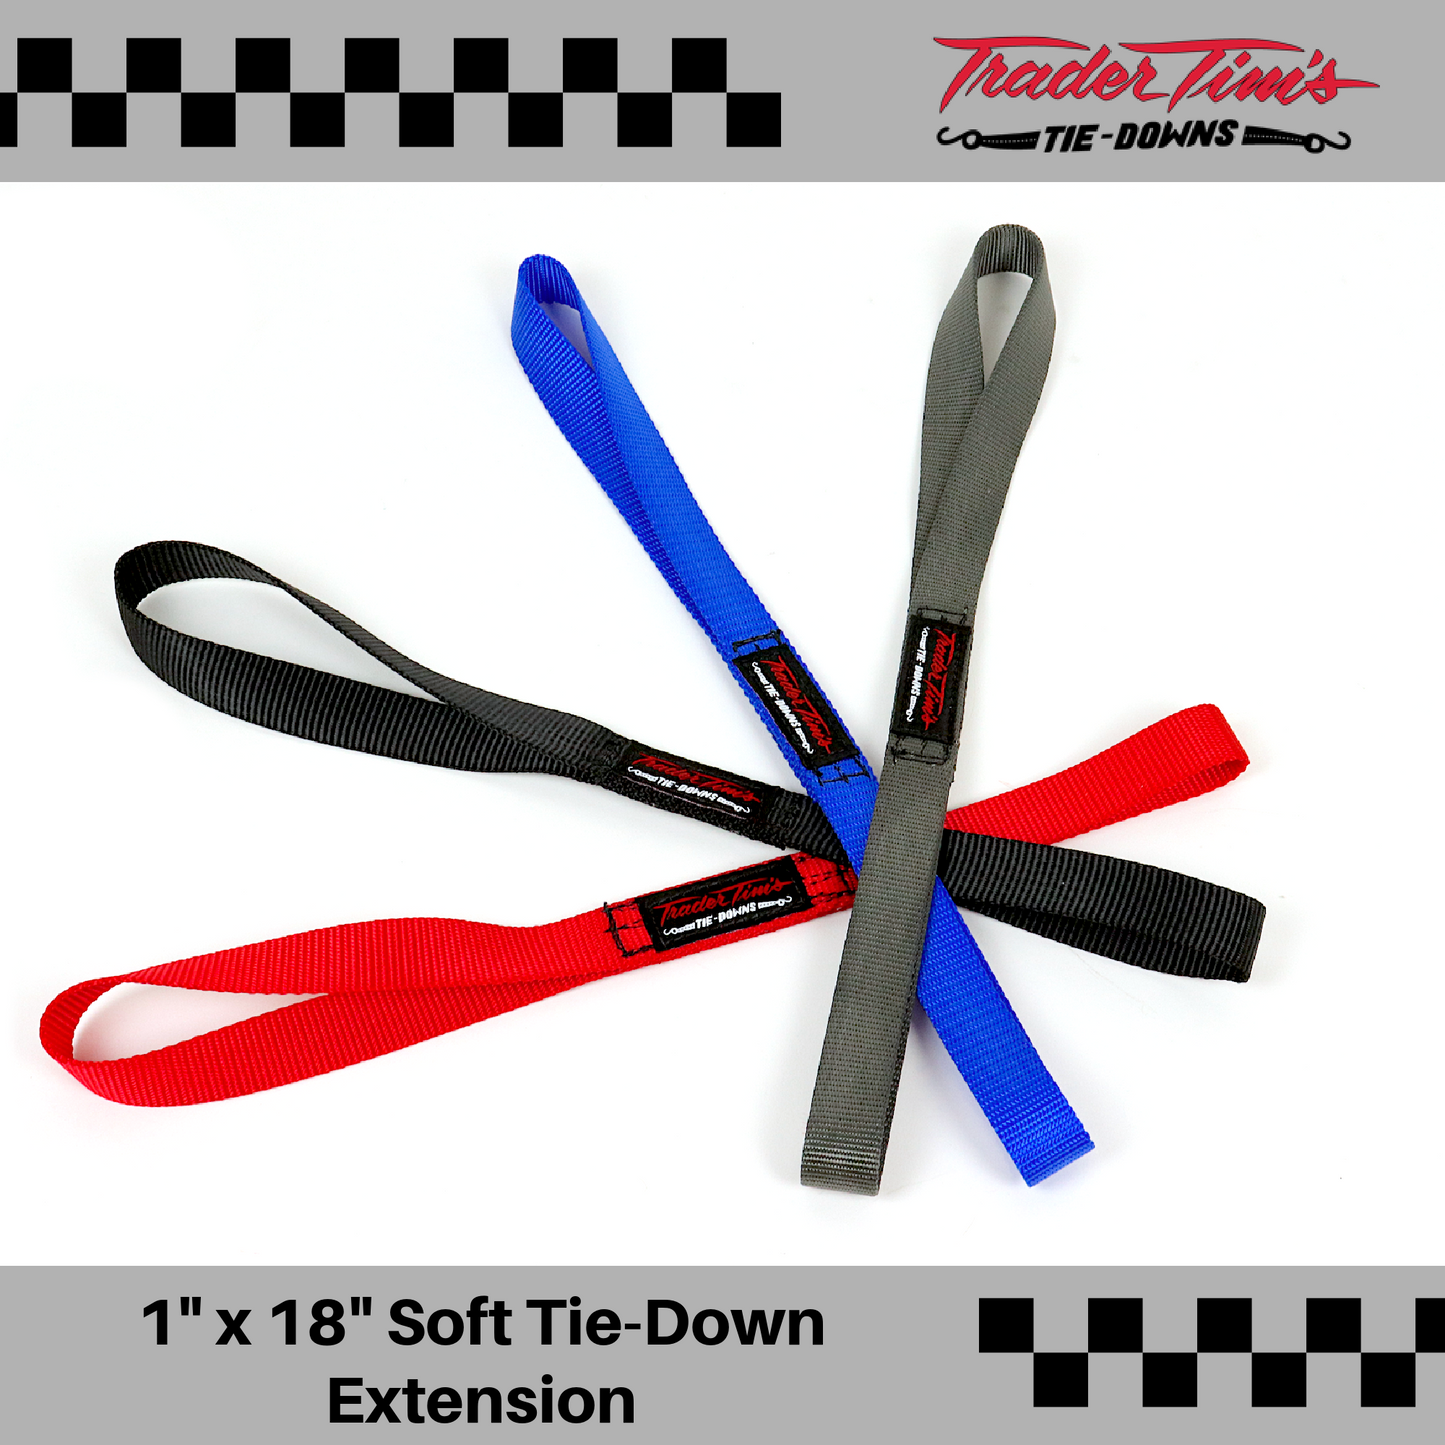 13 Piece 1" x 8' Ratchet Tie-Down with Soft Tie Kit - 4 Color Options